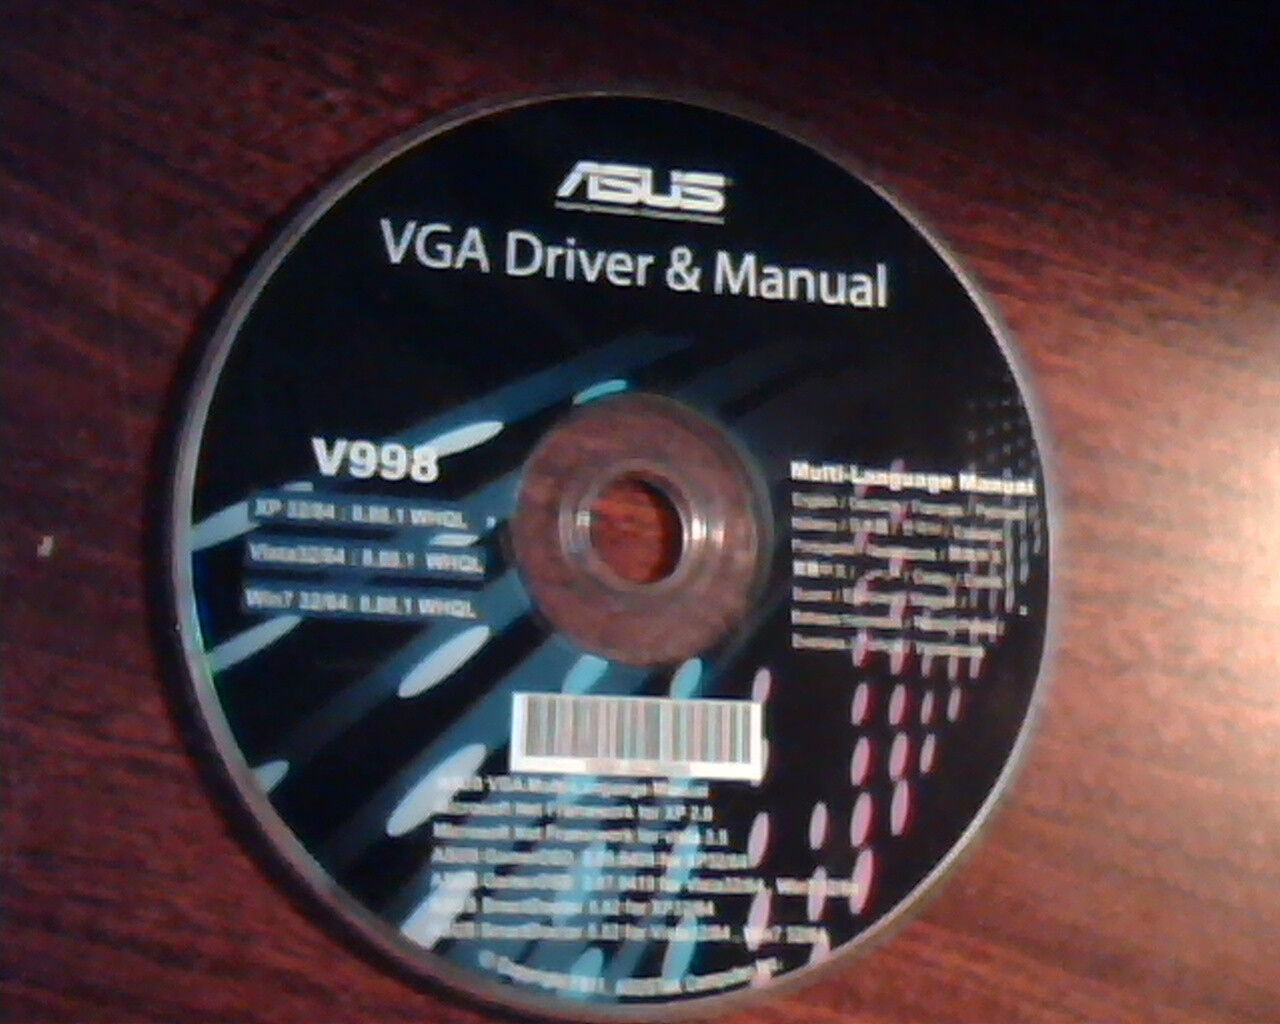 CD ASUS VGA Driver and Manual V998 SmartDoctor GamerOSD Net Framework